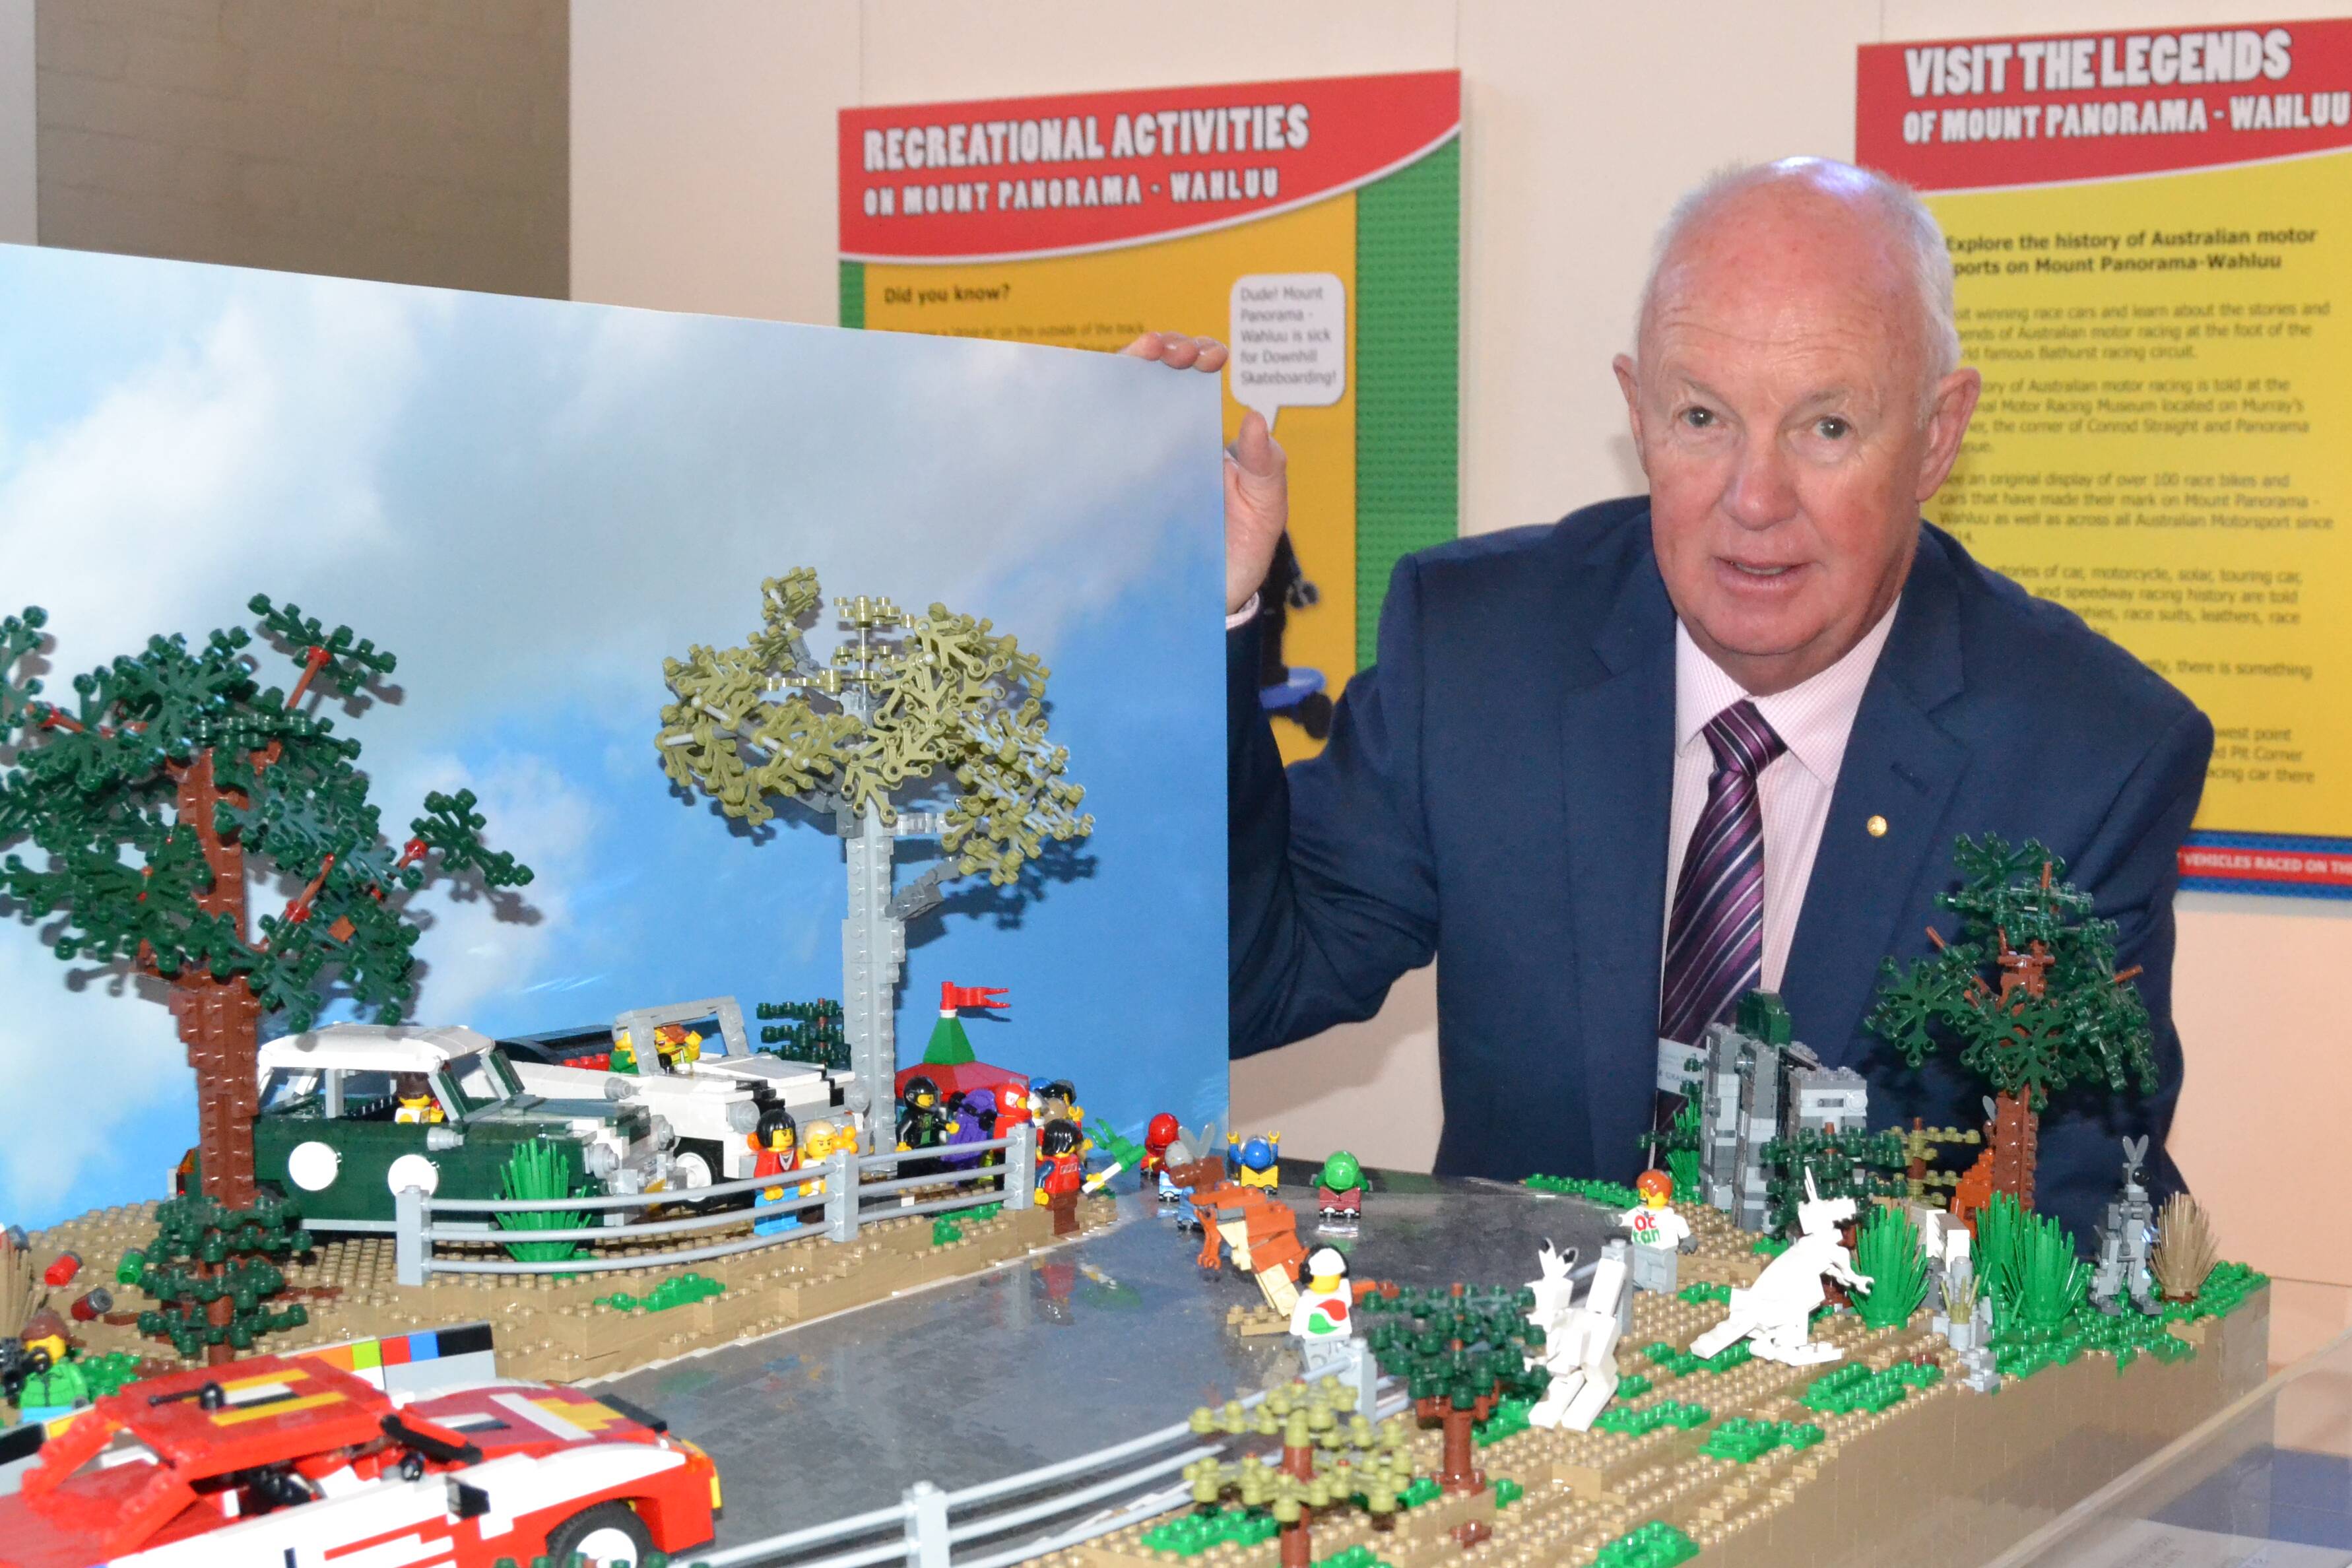 museum to host LEGO model of Mount | Video | Western | Bathurst, NSW